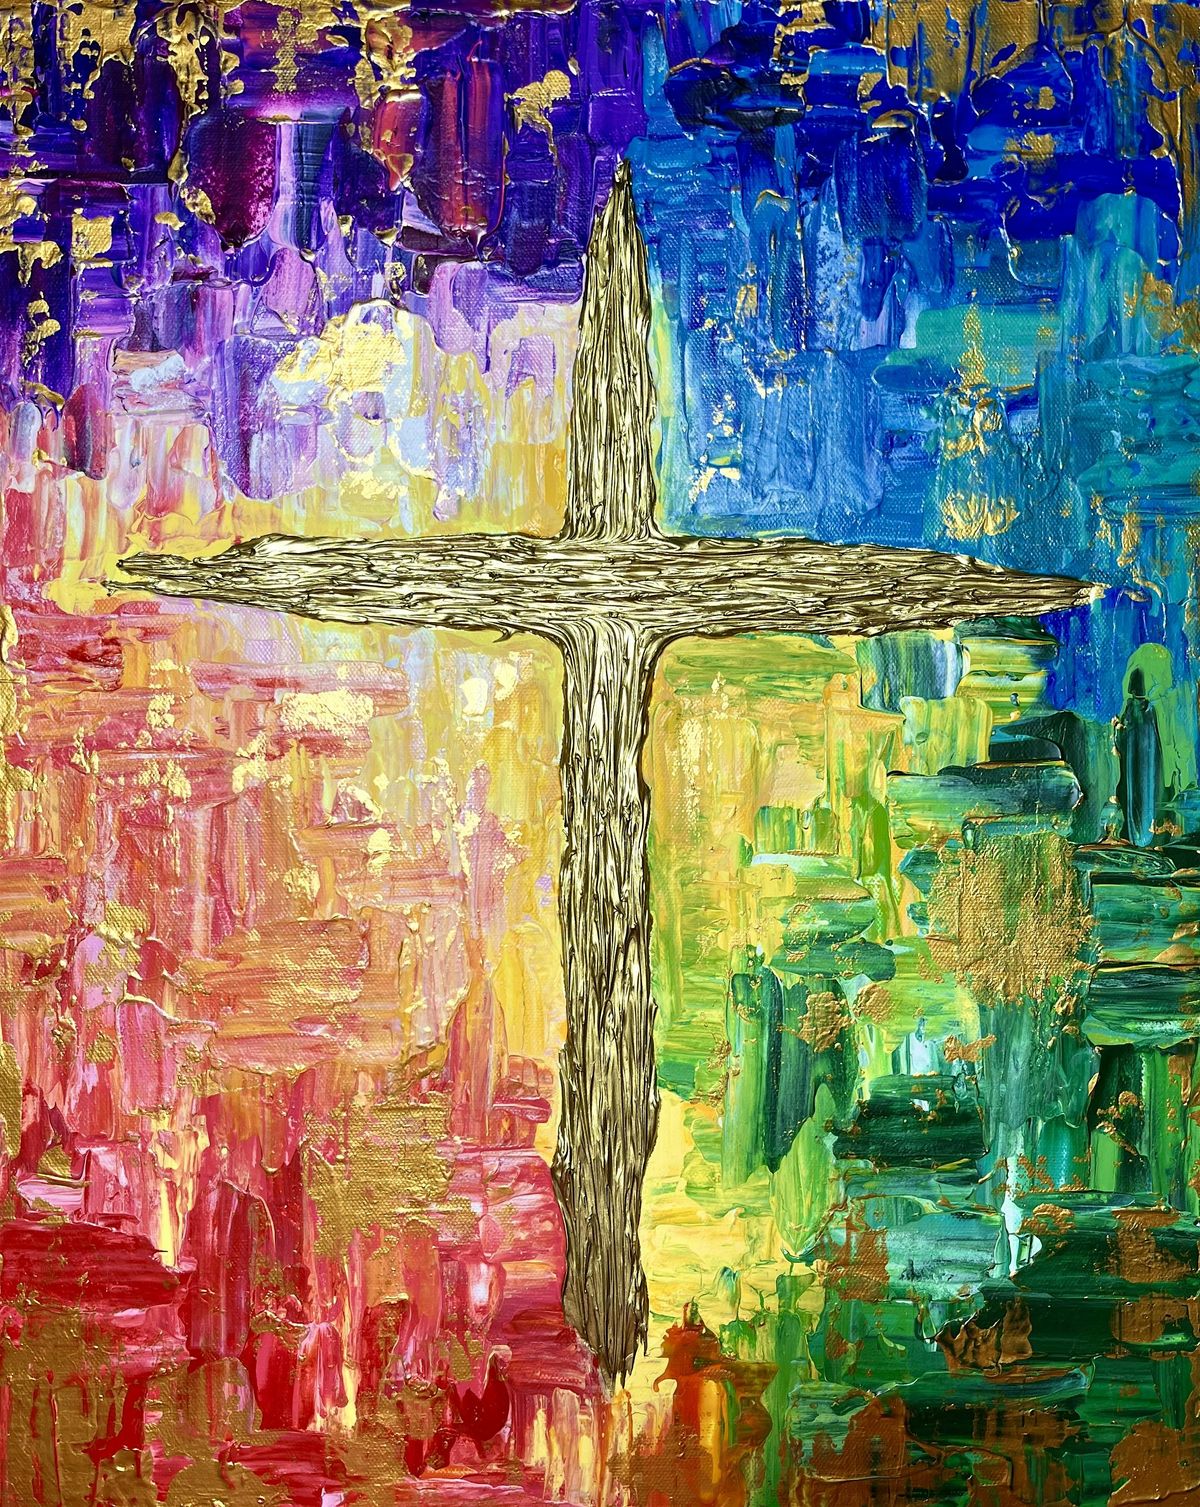 Painted Prayers: Create a Cross